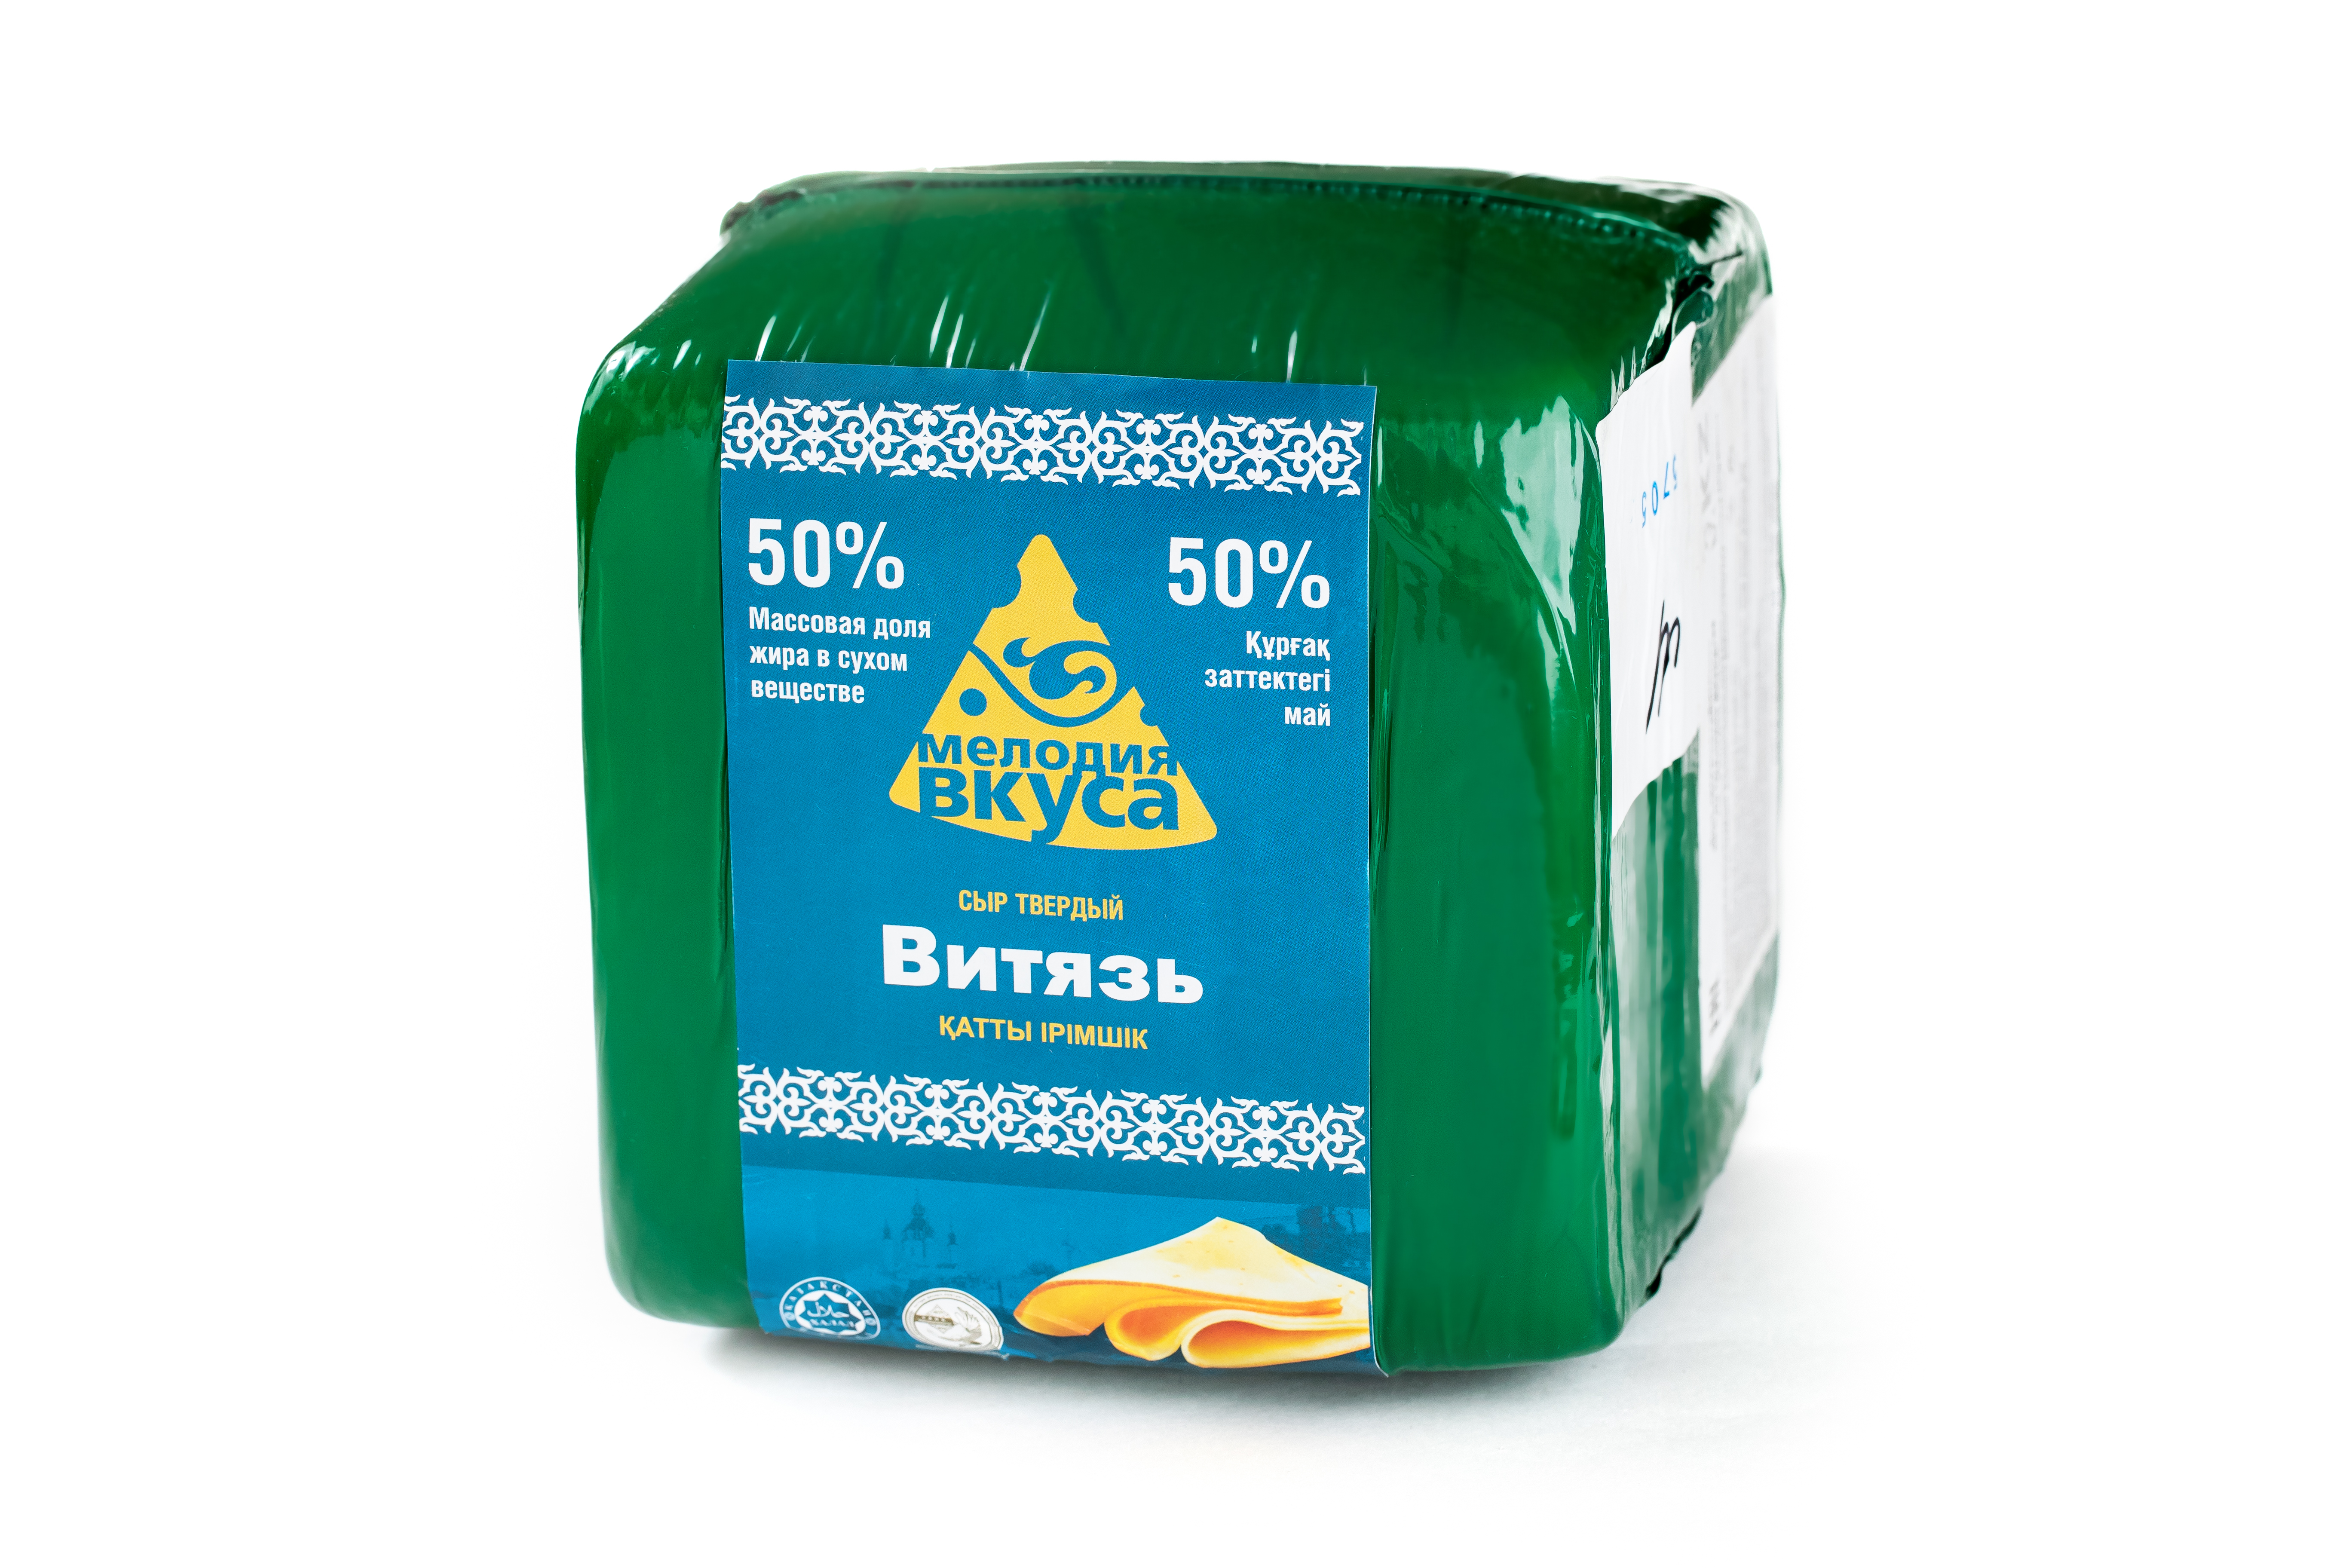 Витязь 50% ~2,5 кг. сыр твёрдый ТМ Мелодия вкуса, вес. /кор.5 шт.